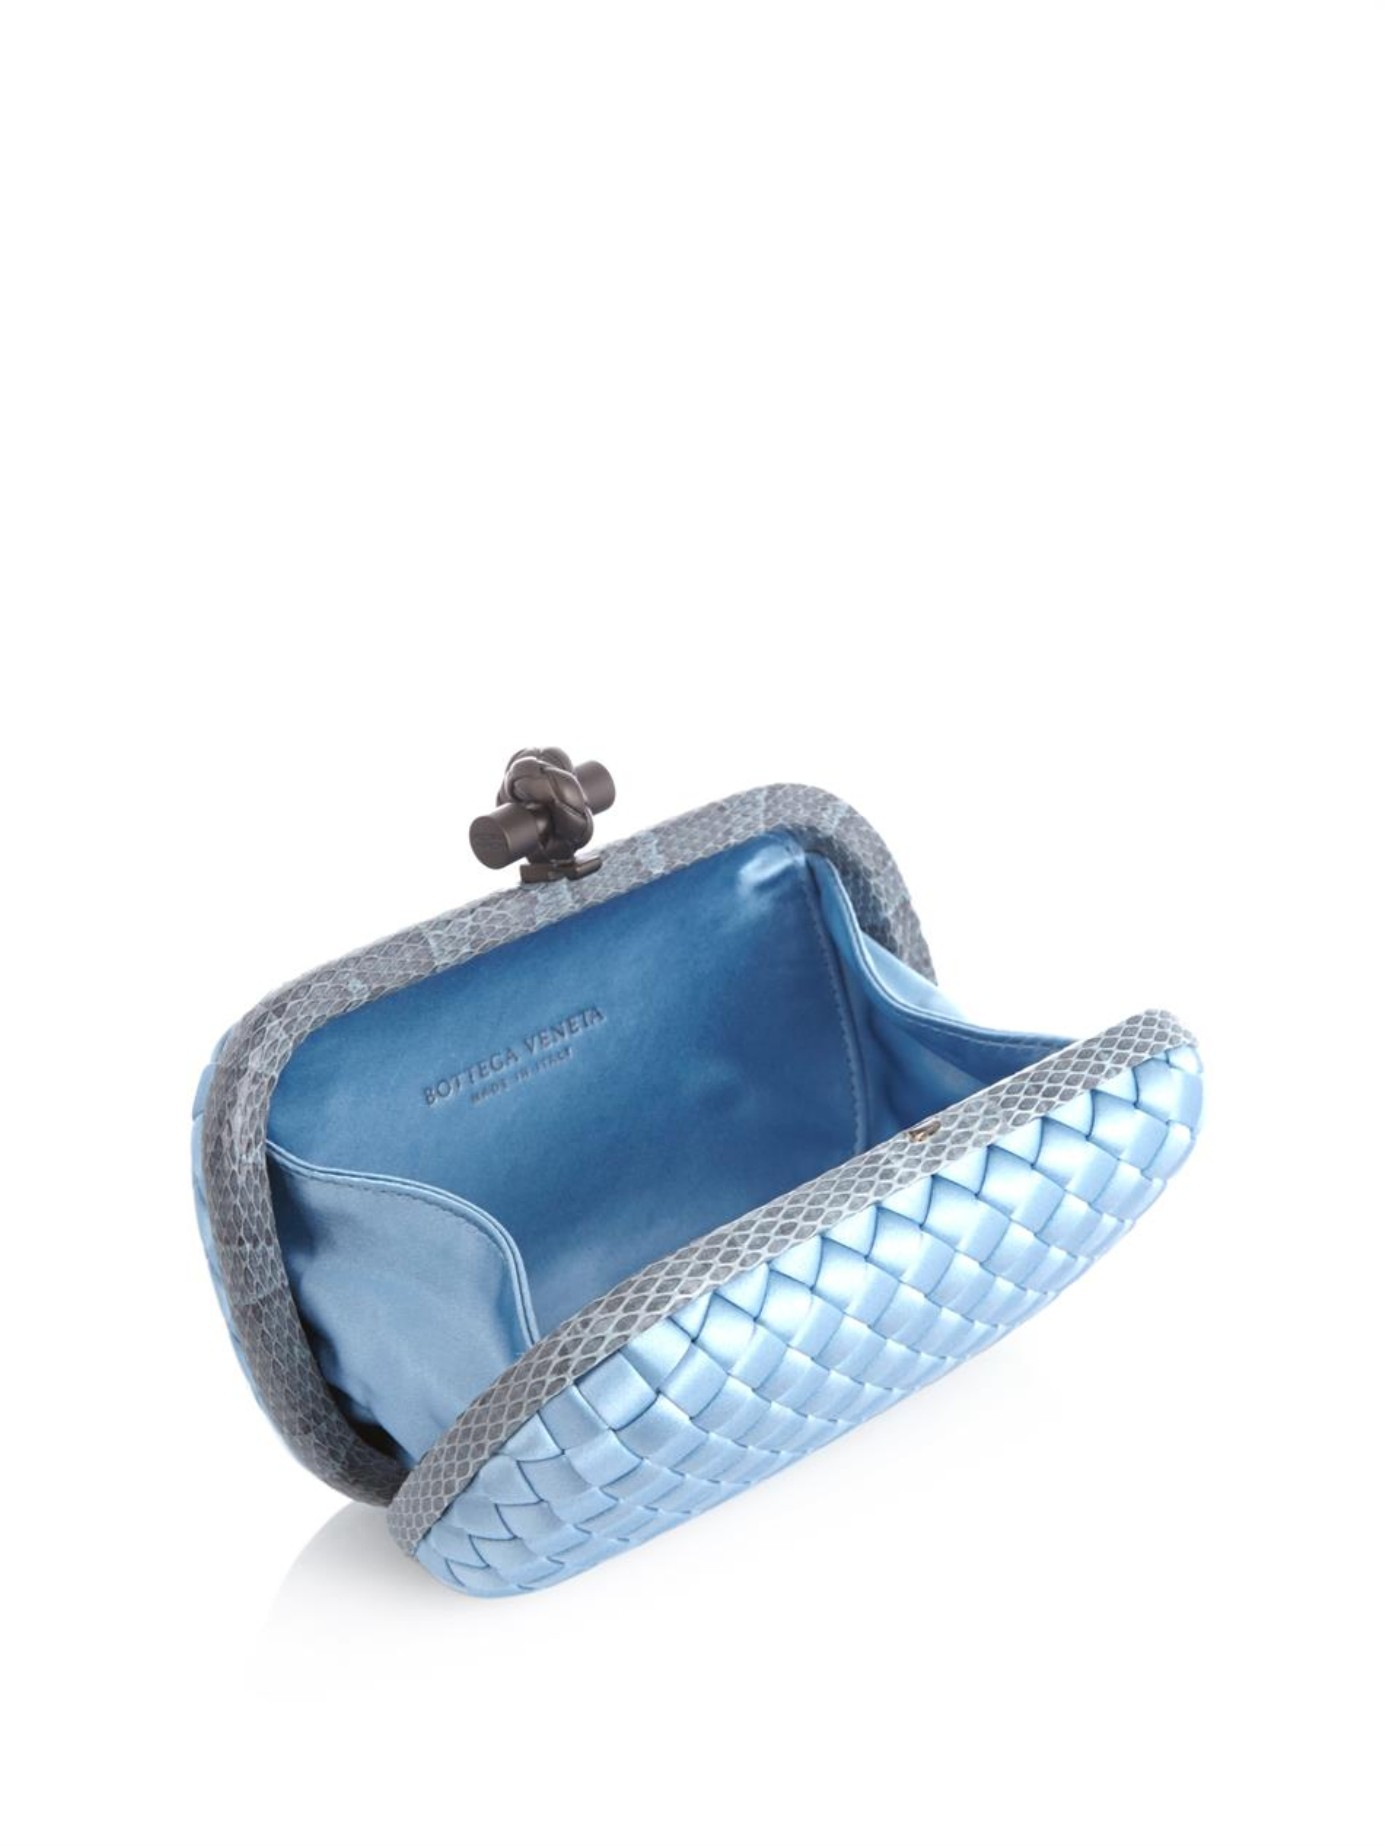 Bottega Veneta Crocodile Knot Clutch - Blue Clutches, Handbags